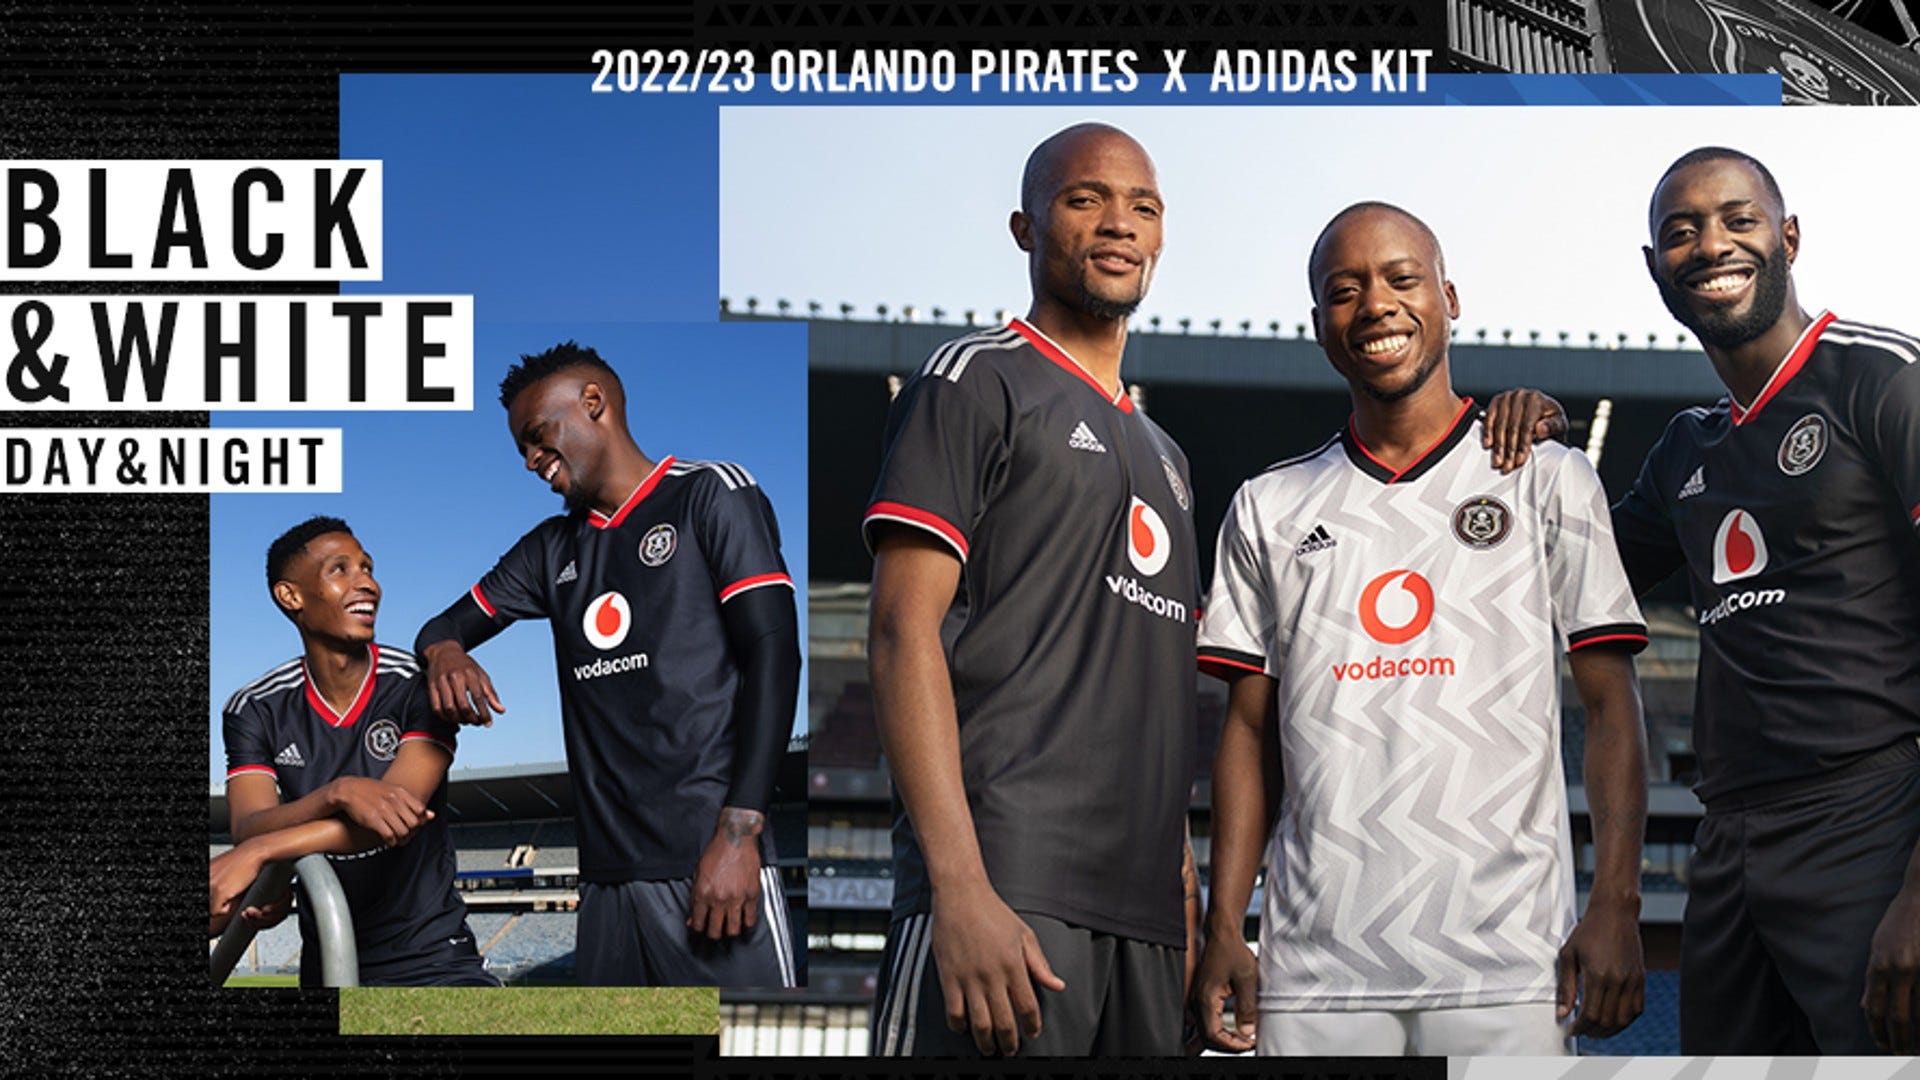 2020/21 Orlando Pirates x adidas Home & Away Jersey Kit Reveal